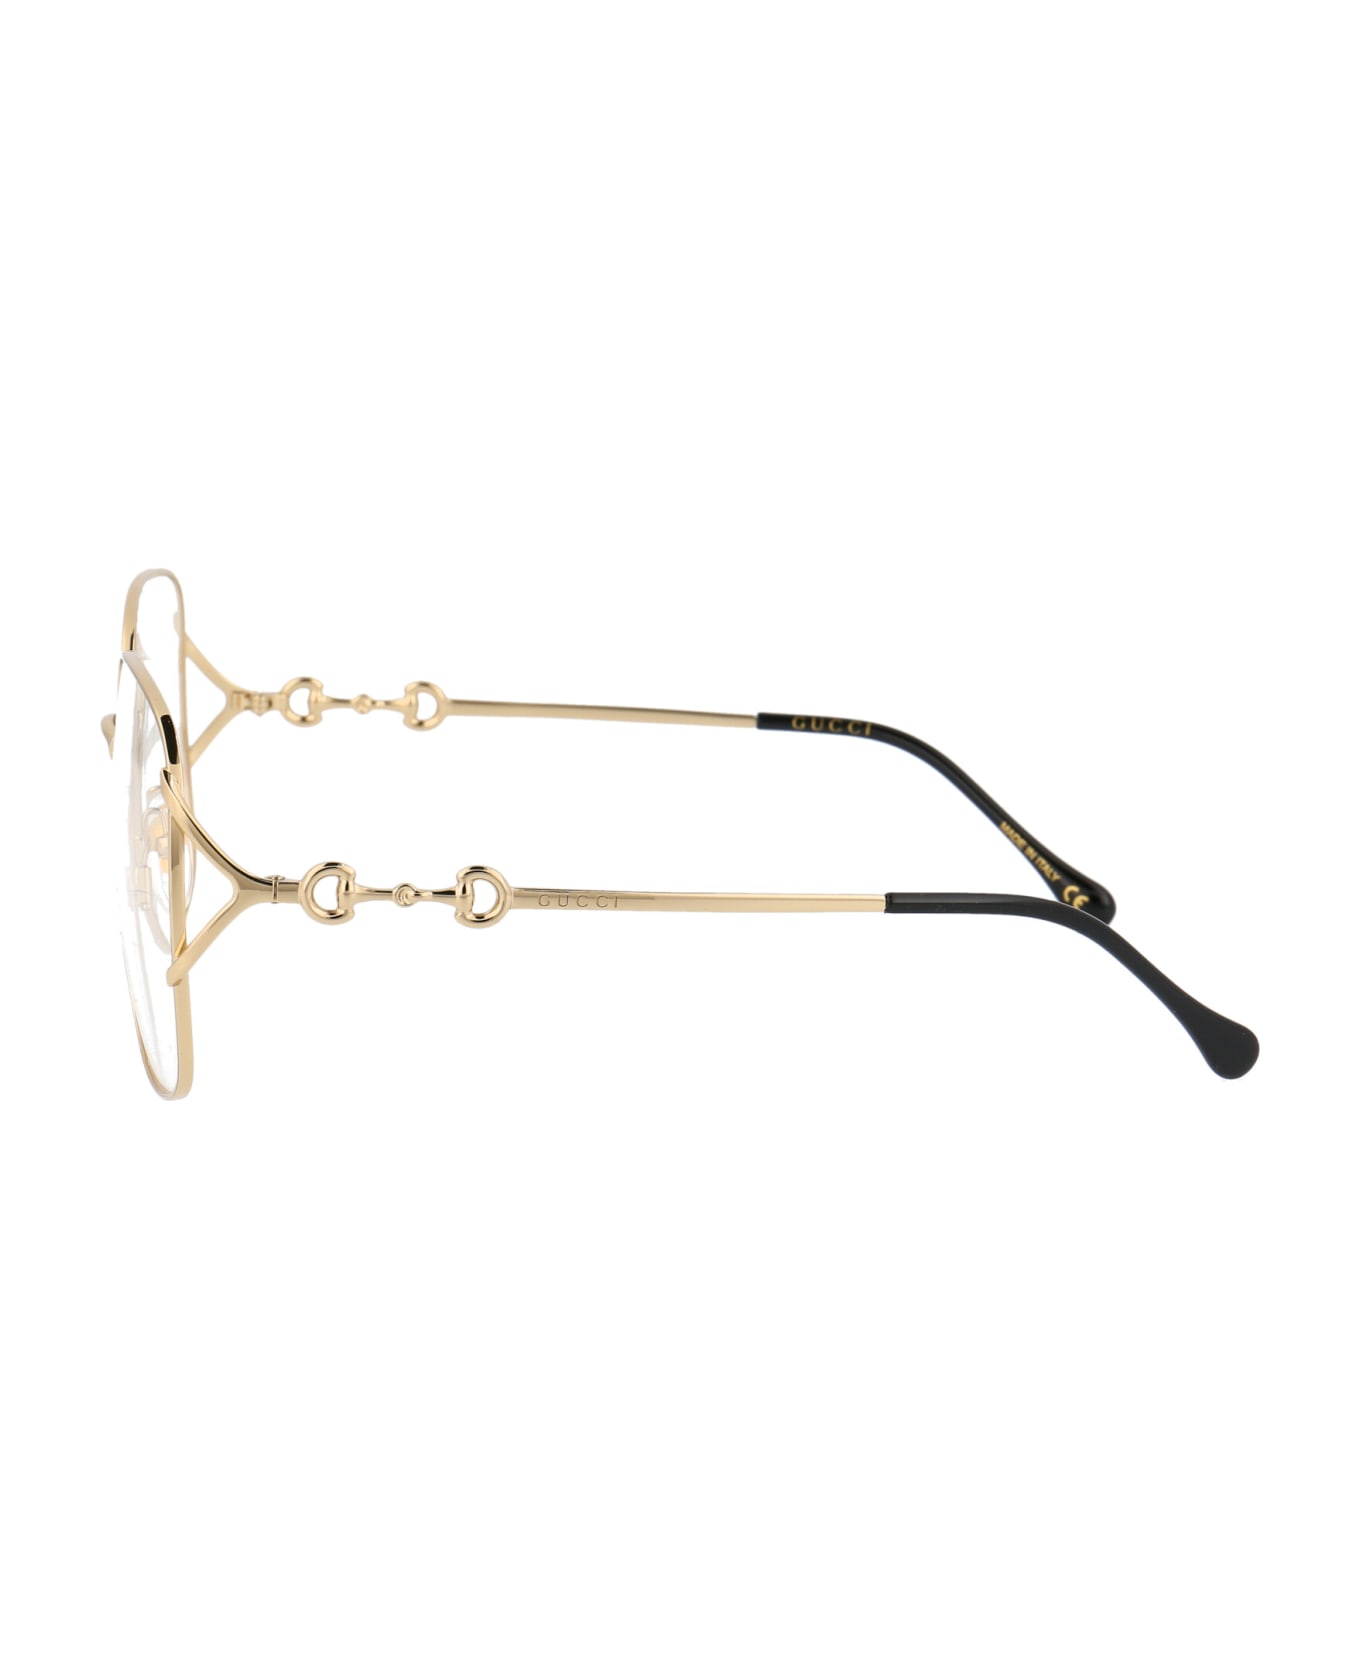 Gucci Eyewear Gg1019o Glasses - 001 GOLD GOLD TRANSPARENT